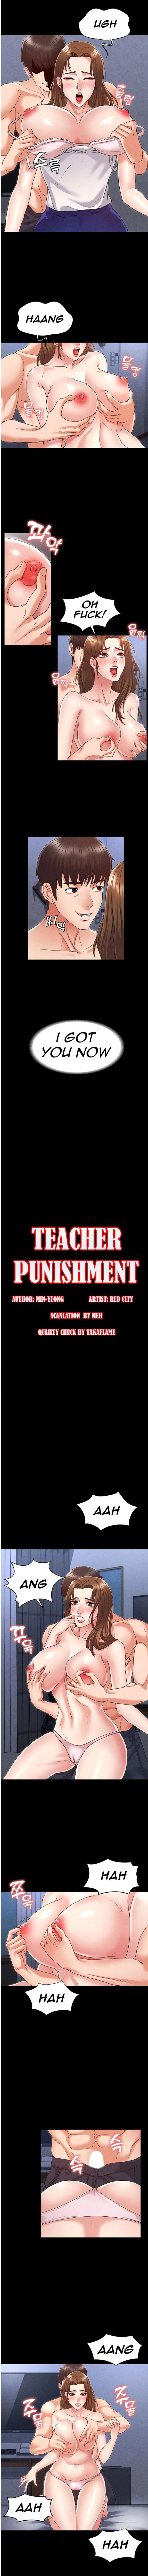 TEACHER PUNISHMENT Ch.1-9 19